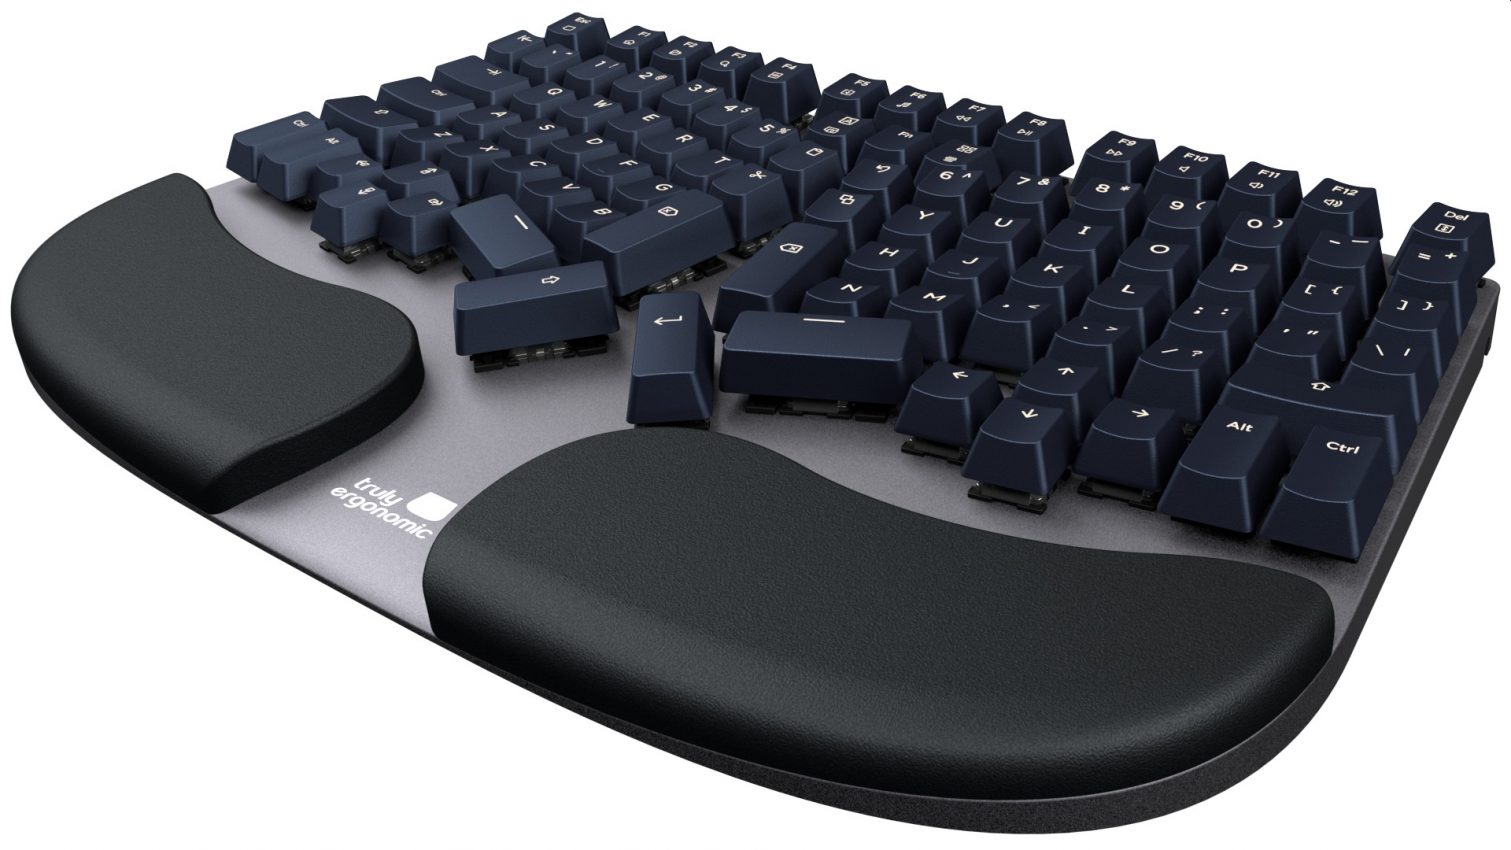 ergonomic mac keyboard reddit